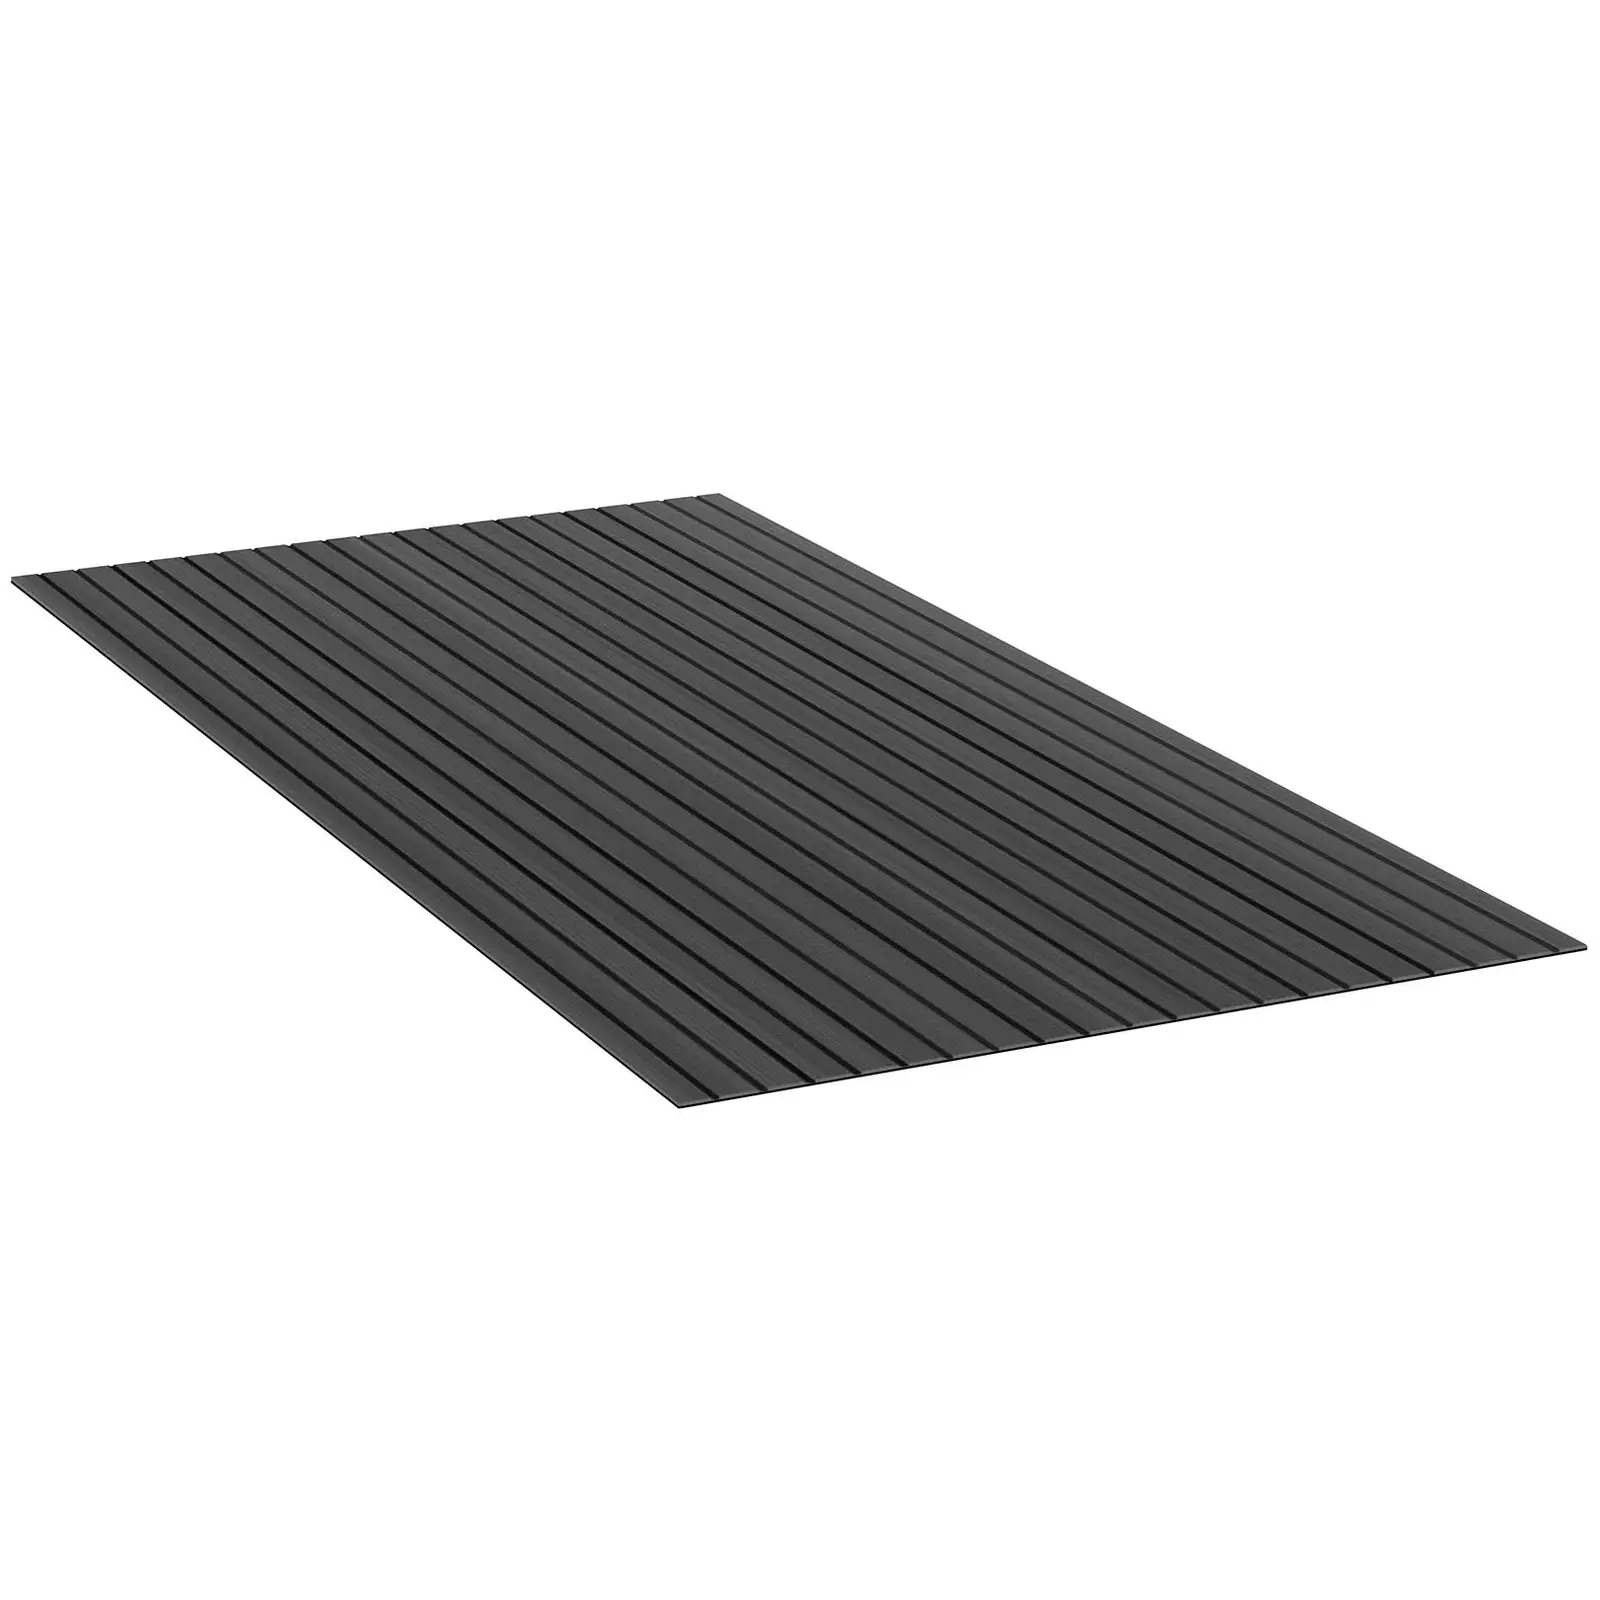 Valčių grindys - 240 x 120 cm - antracito/juodos spalvos